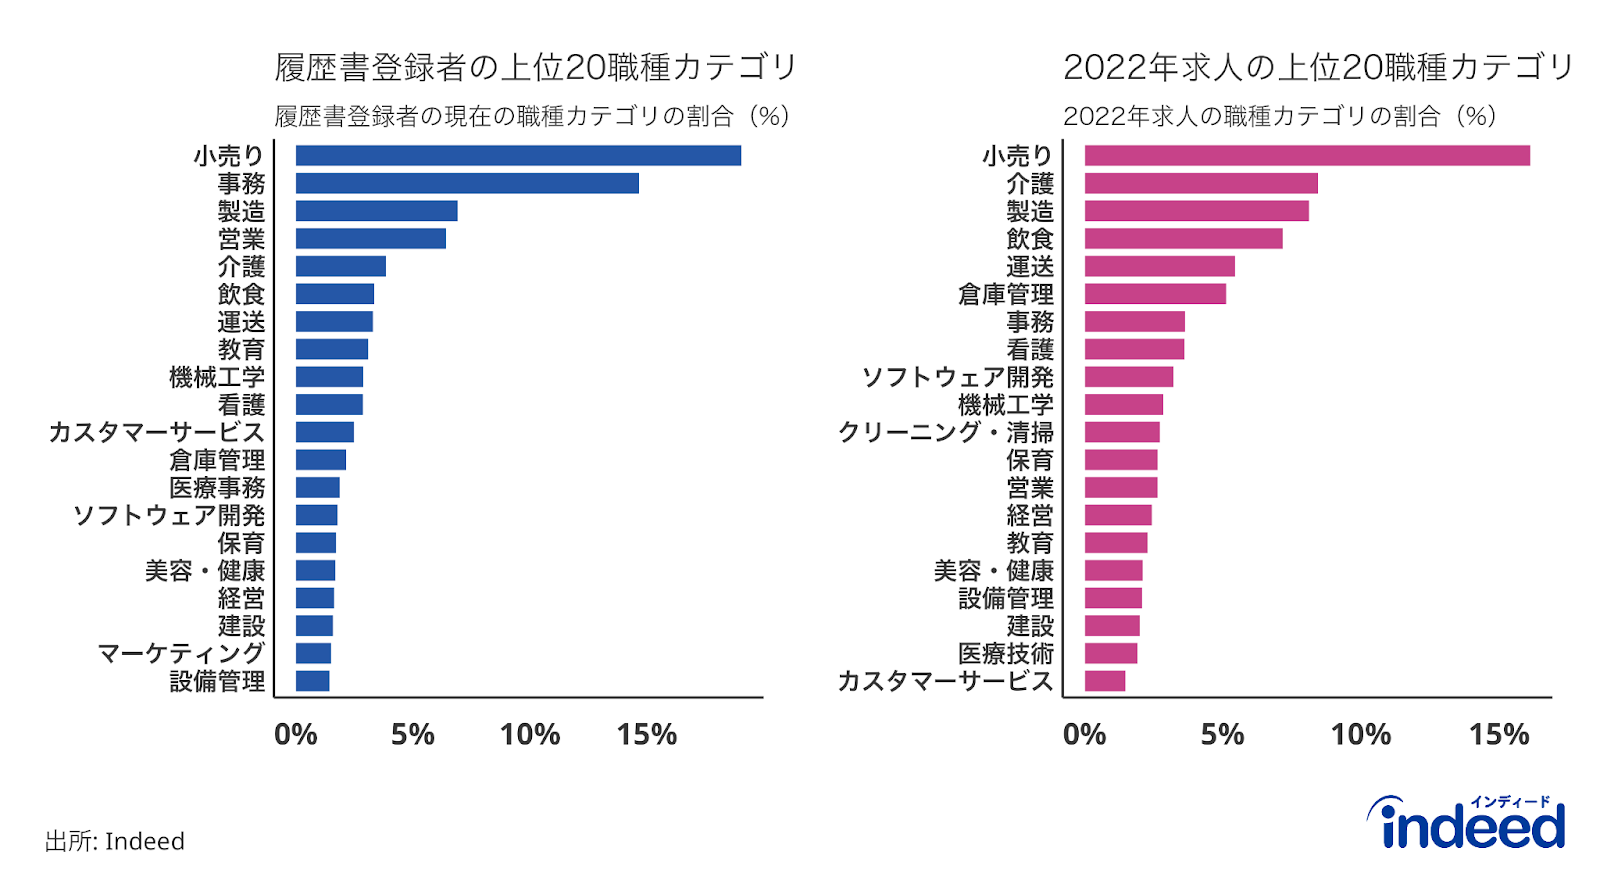 Indeedの日本の職種カテゴリ別の履歴書割合（左図）と2022年求人割合（右図）について、上位20職種カテゴリを掲載。左図は履歴書データ、右図は求人掲載データより算出。